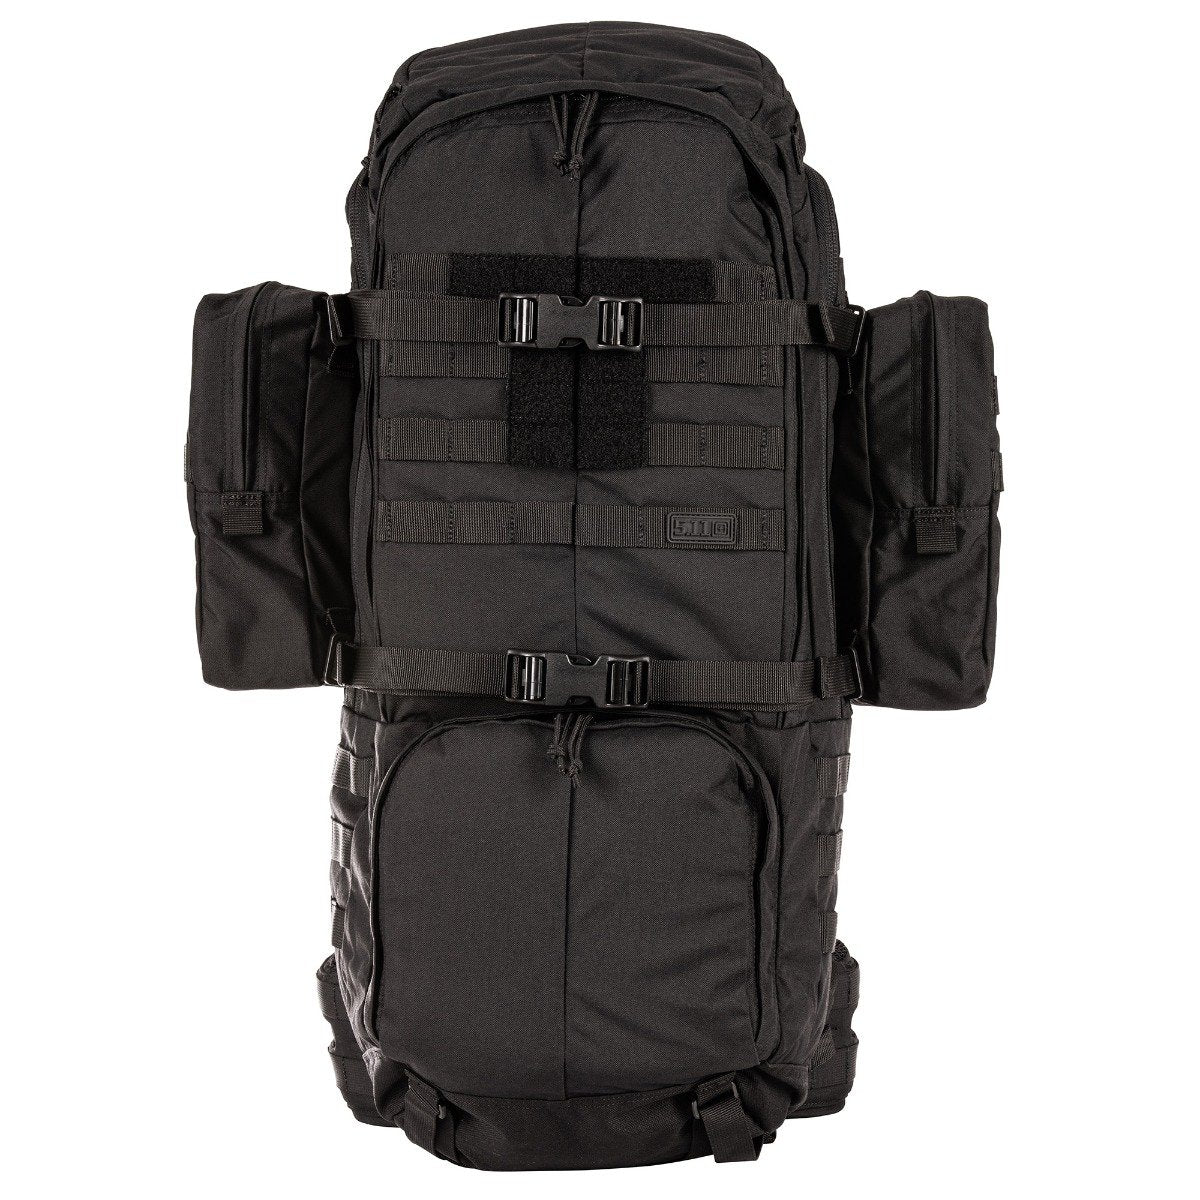 5.11 Tactical Rush100 60L Backpack Black Bags, Packs and Cases 5.11 Tactical Small/Medium Tactical Gear Supplier Tactical Distributors Australia